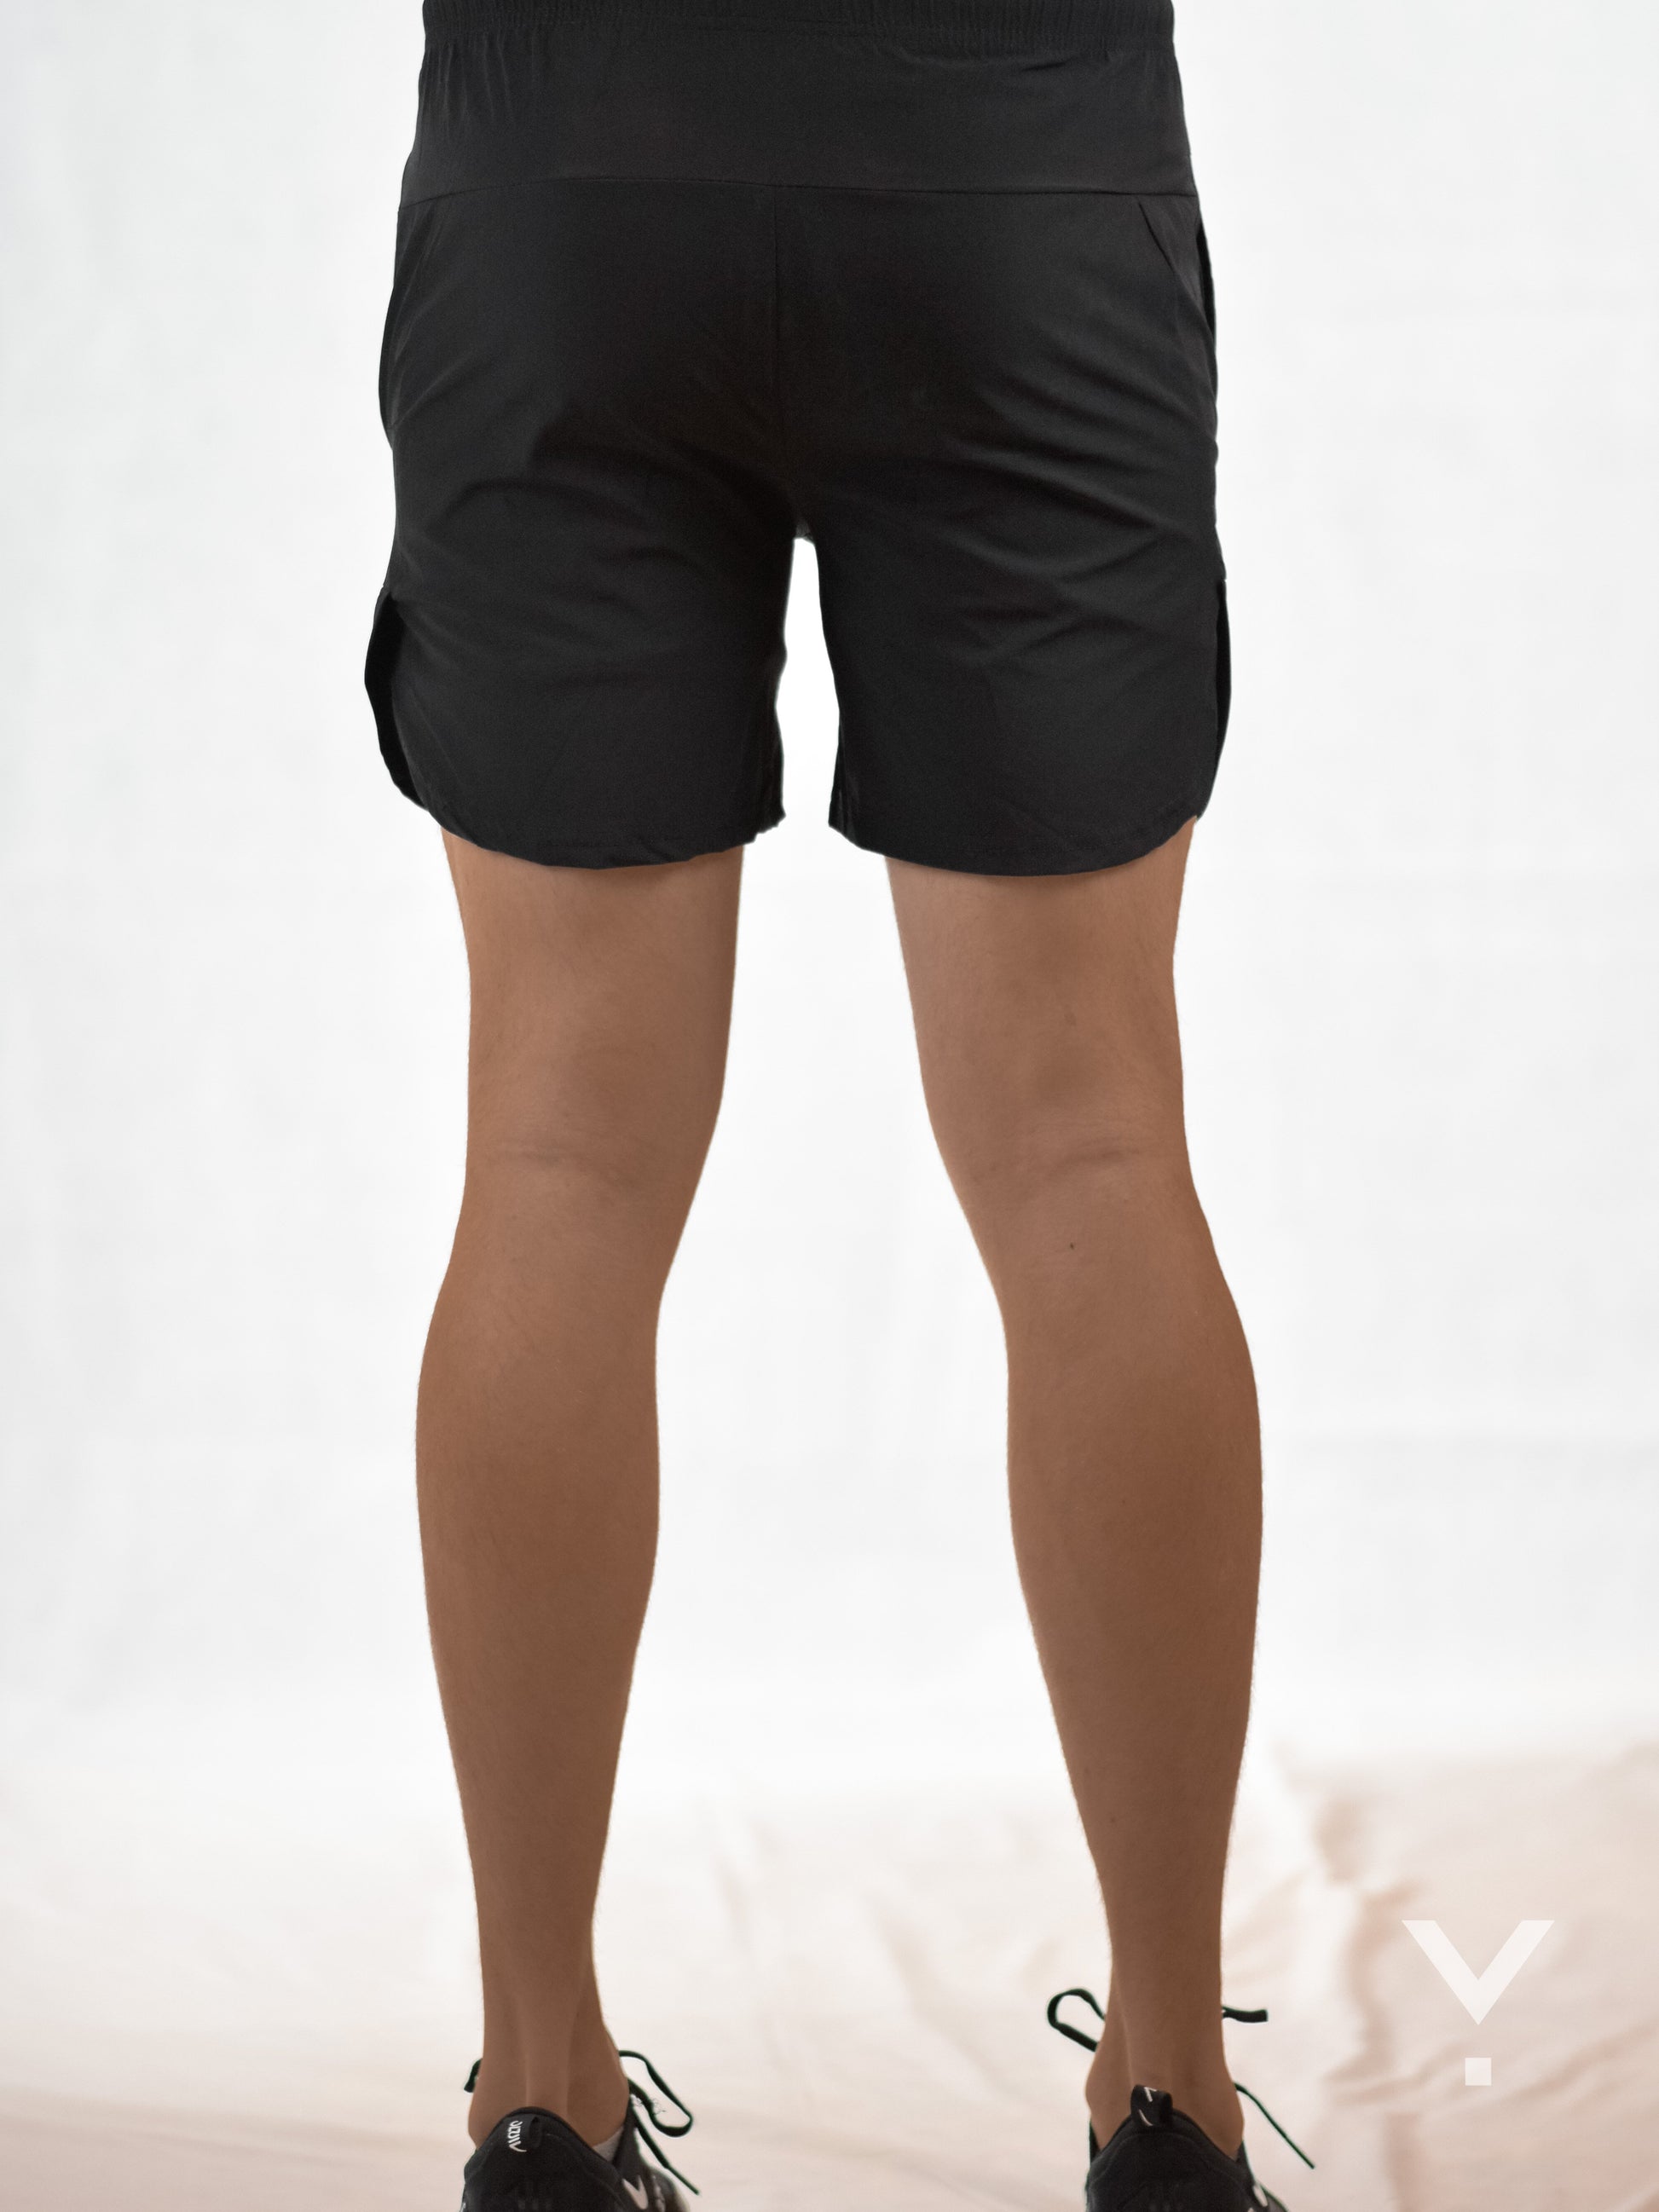 Legacy Shorts Black - Mens Shorts | AVAYOS